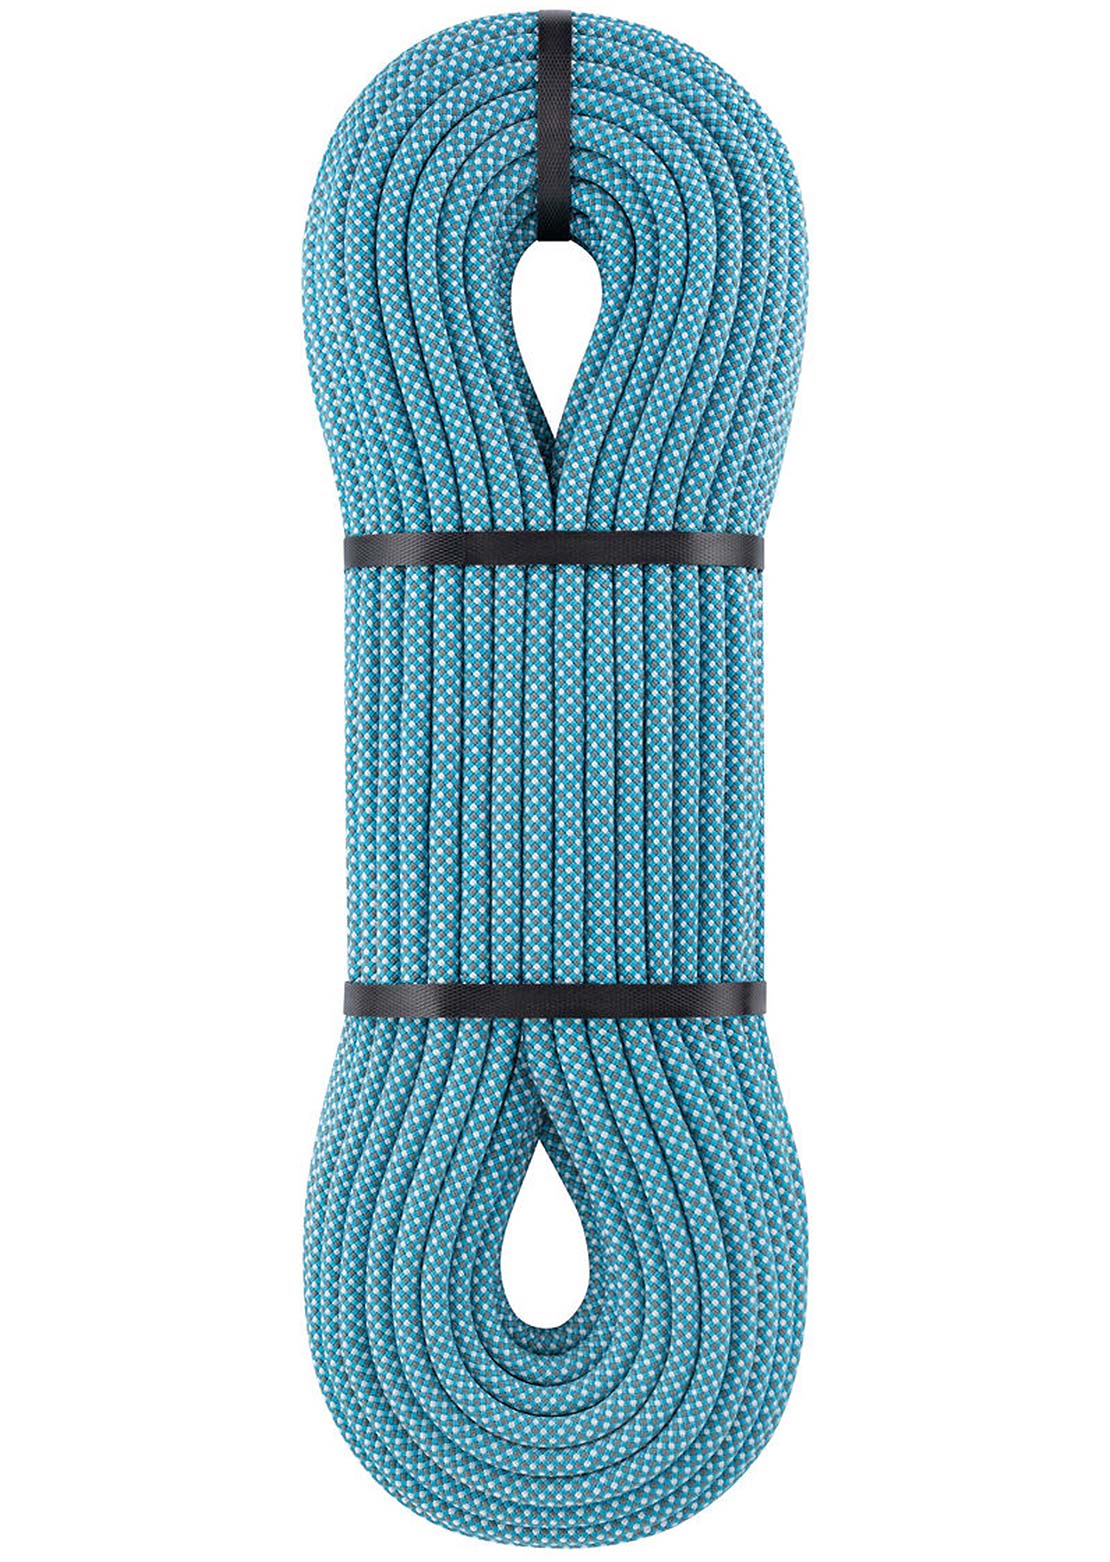 Petzl Mambo 10.1mm Climbing Rope - 60m - PRFO Sports